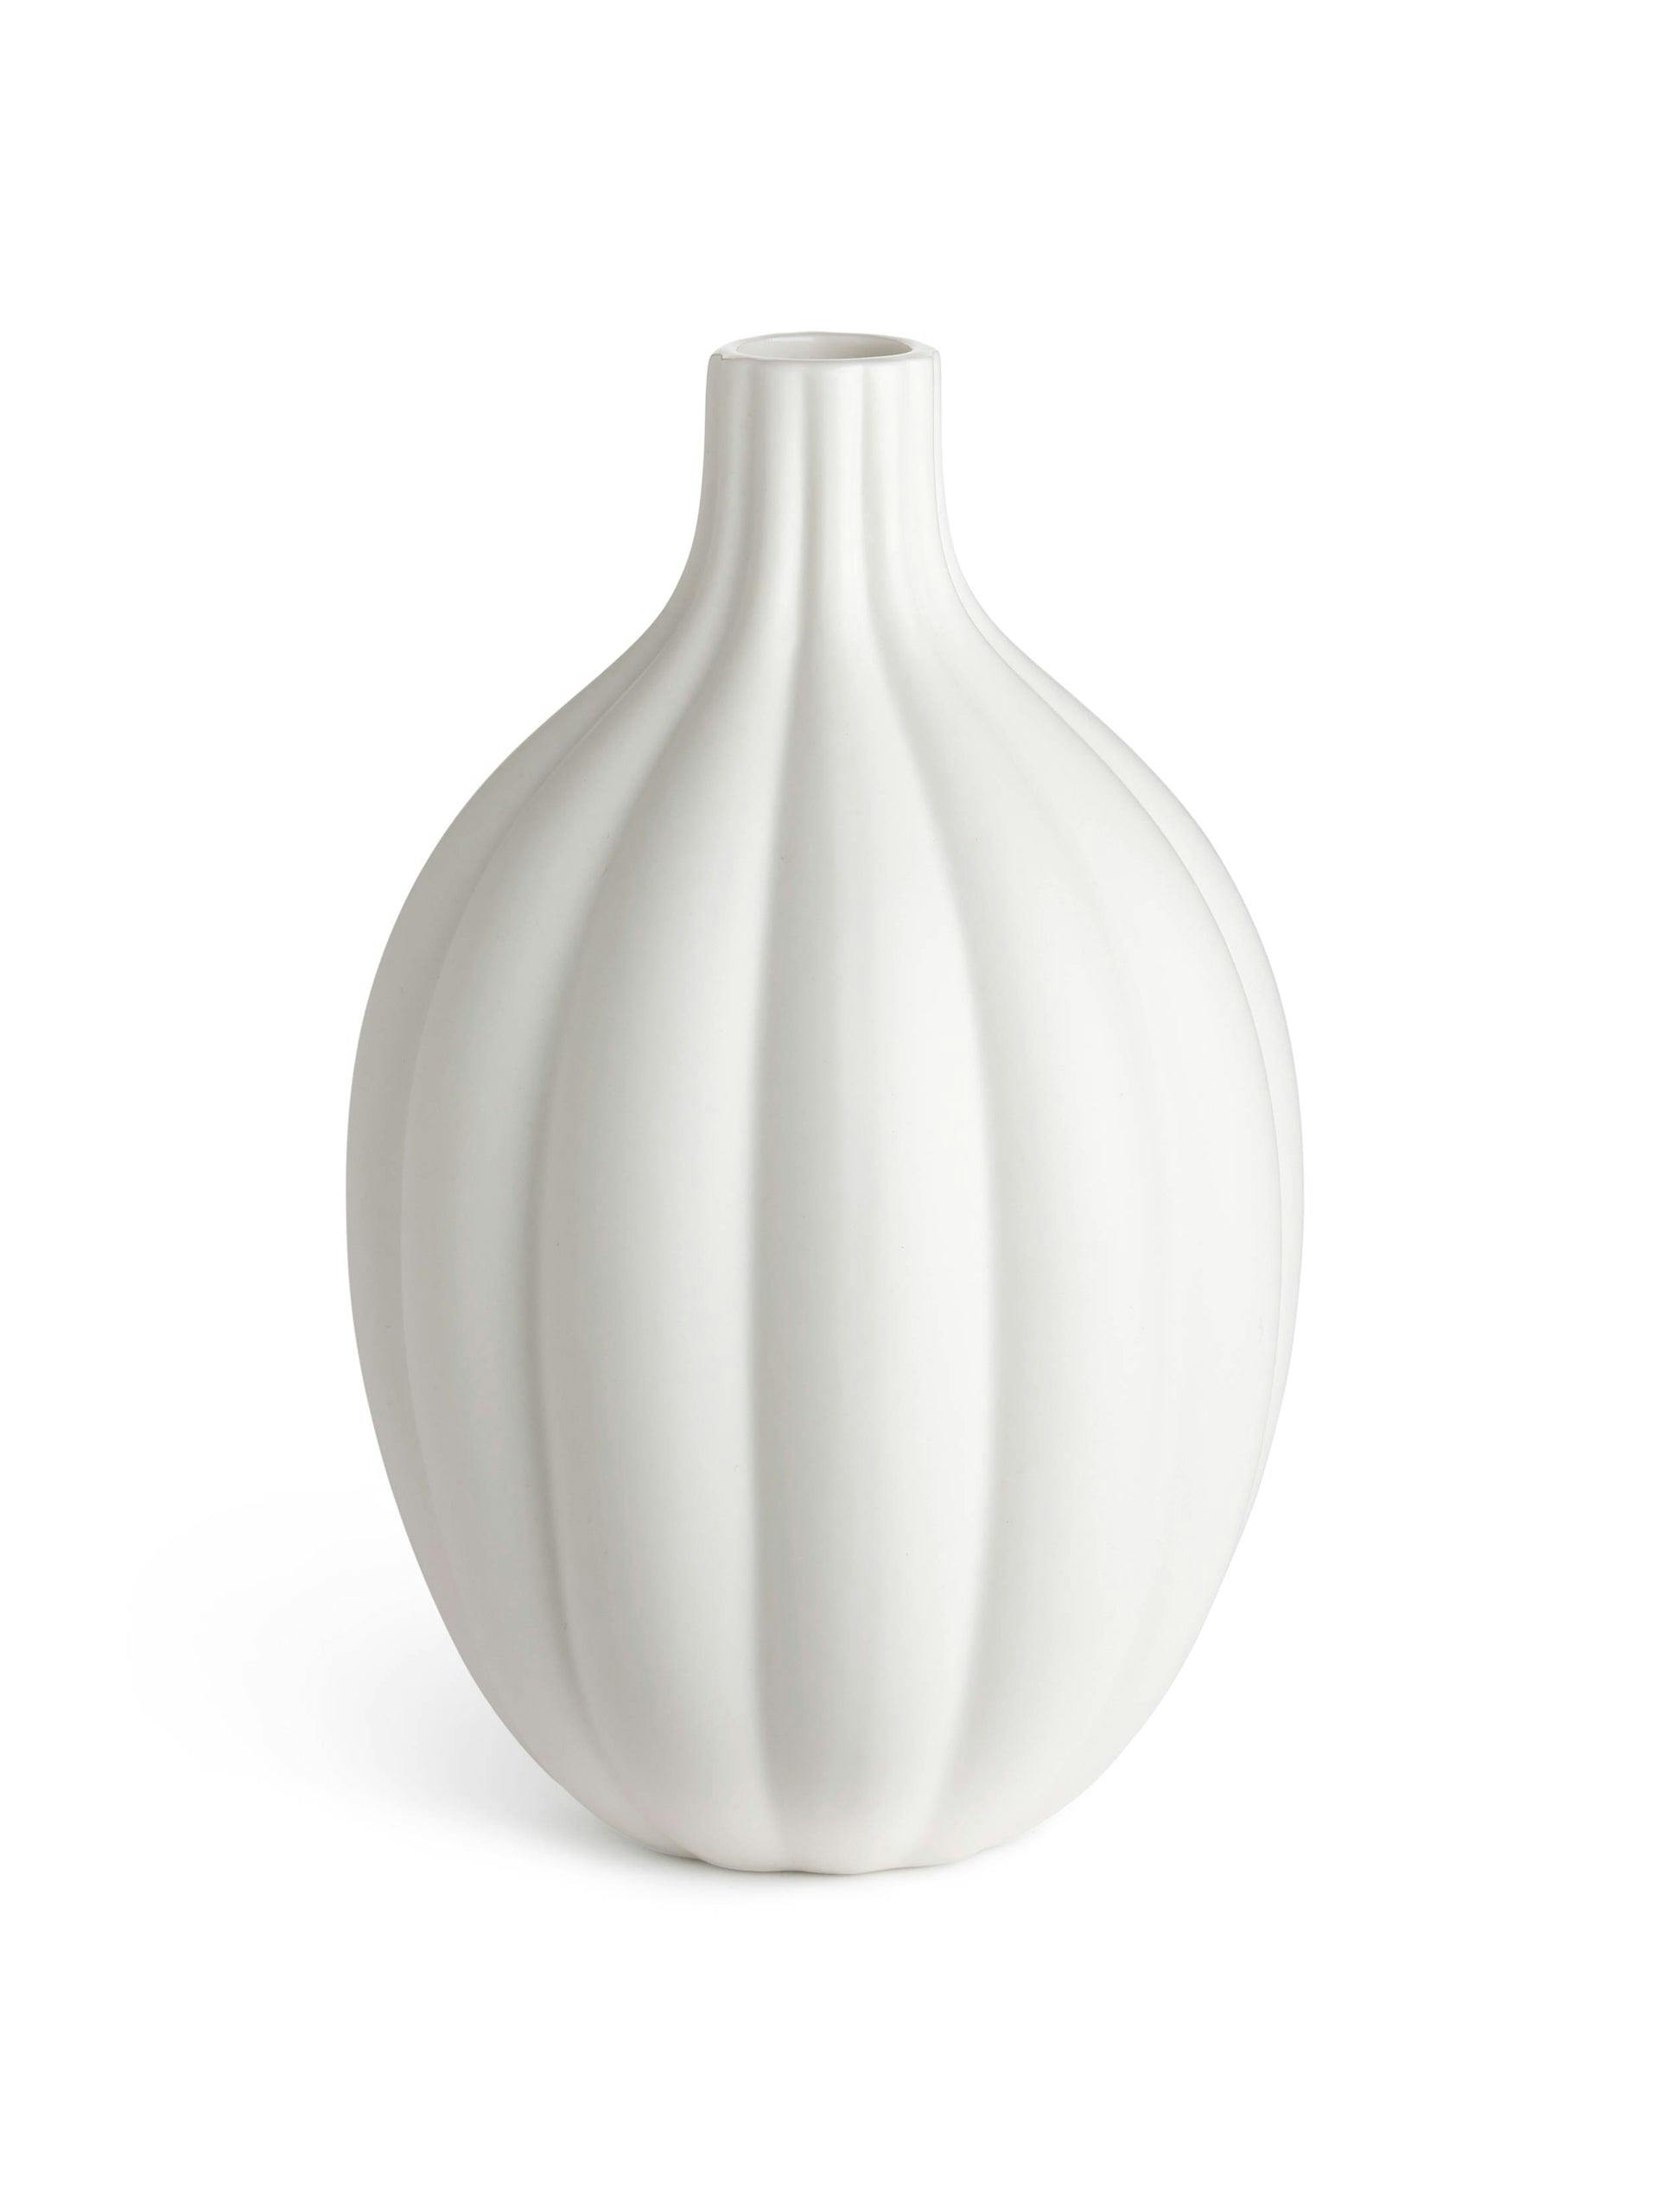 White stone ware ribbed vase